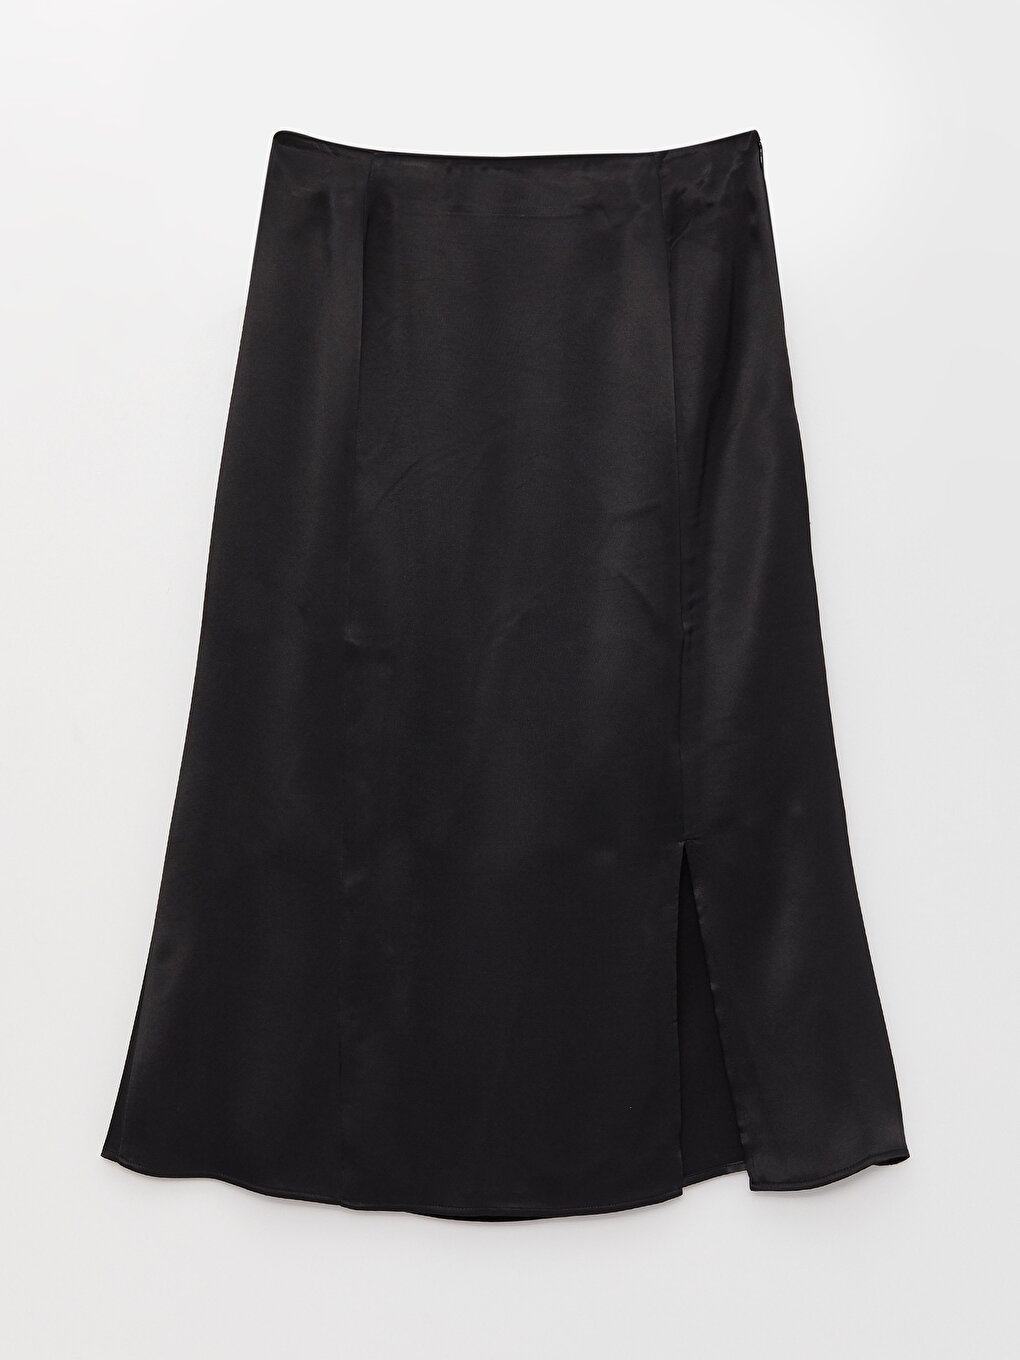 Women's Standard Pattern Plain Satin Skirt -S39605Z8-CVL - S39605Z8-CVL ...